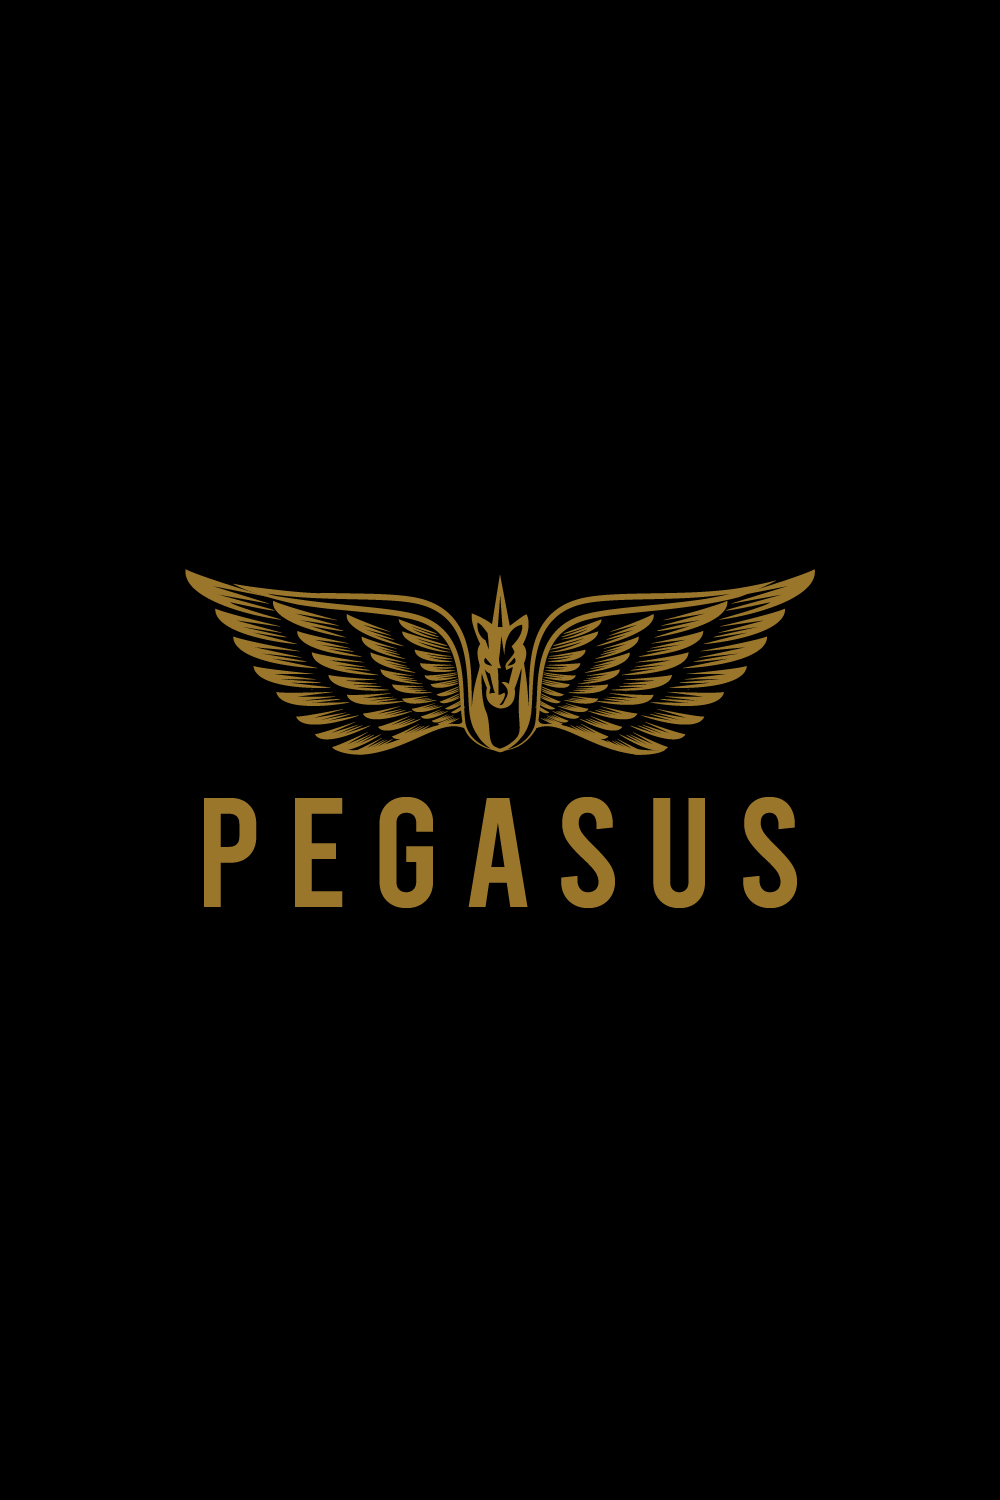 Pegasus Logos pinterest preview image.